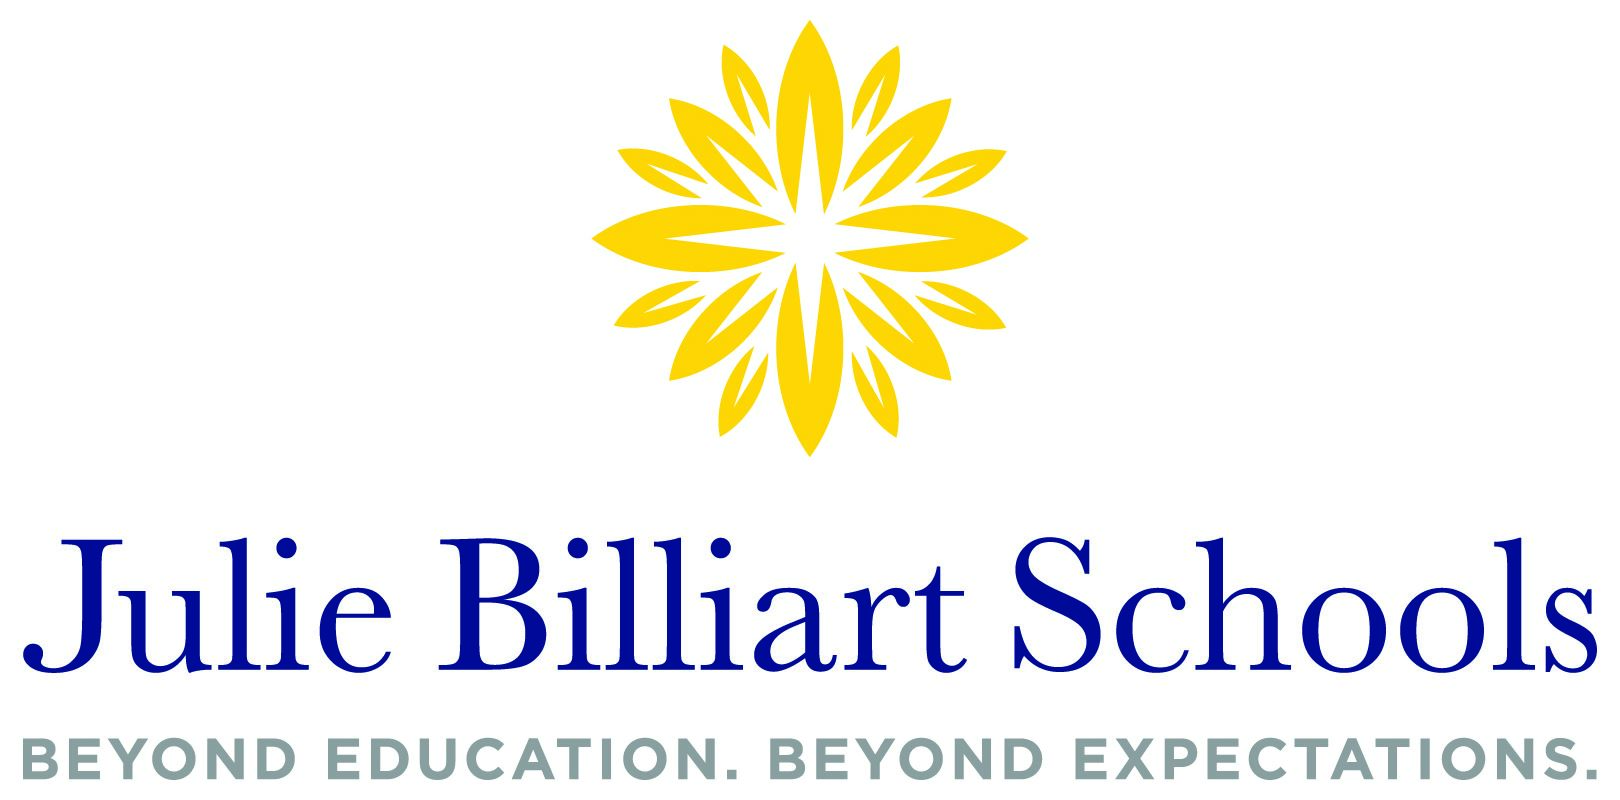 Julie Billiart Schools logo.